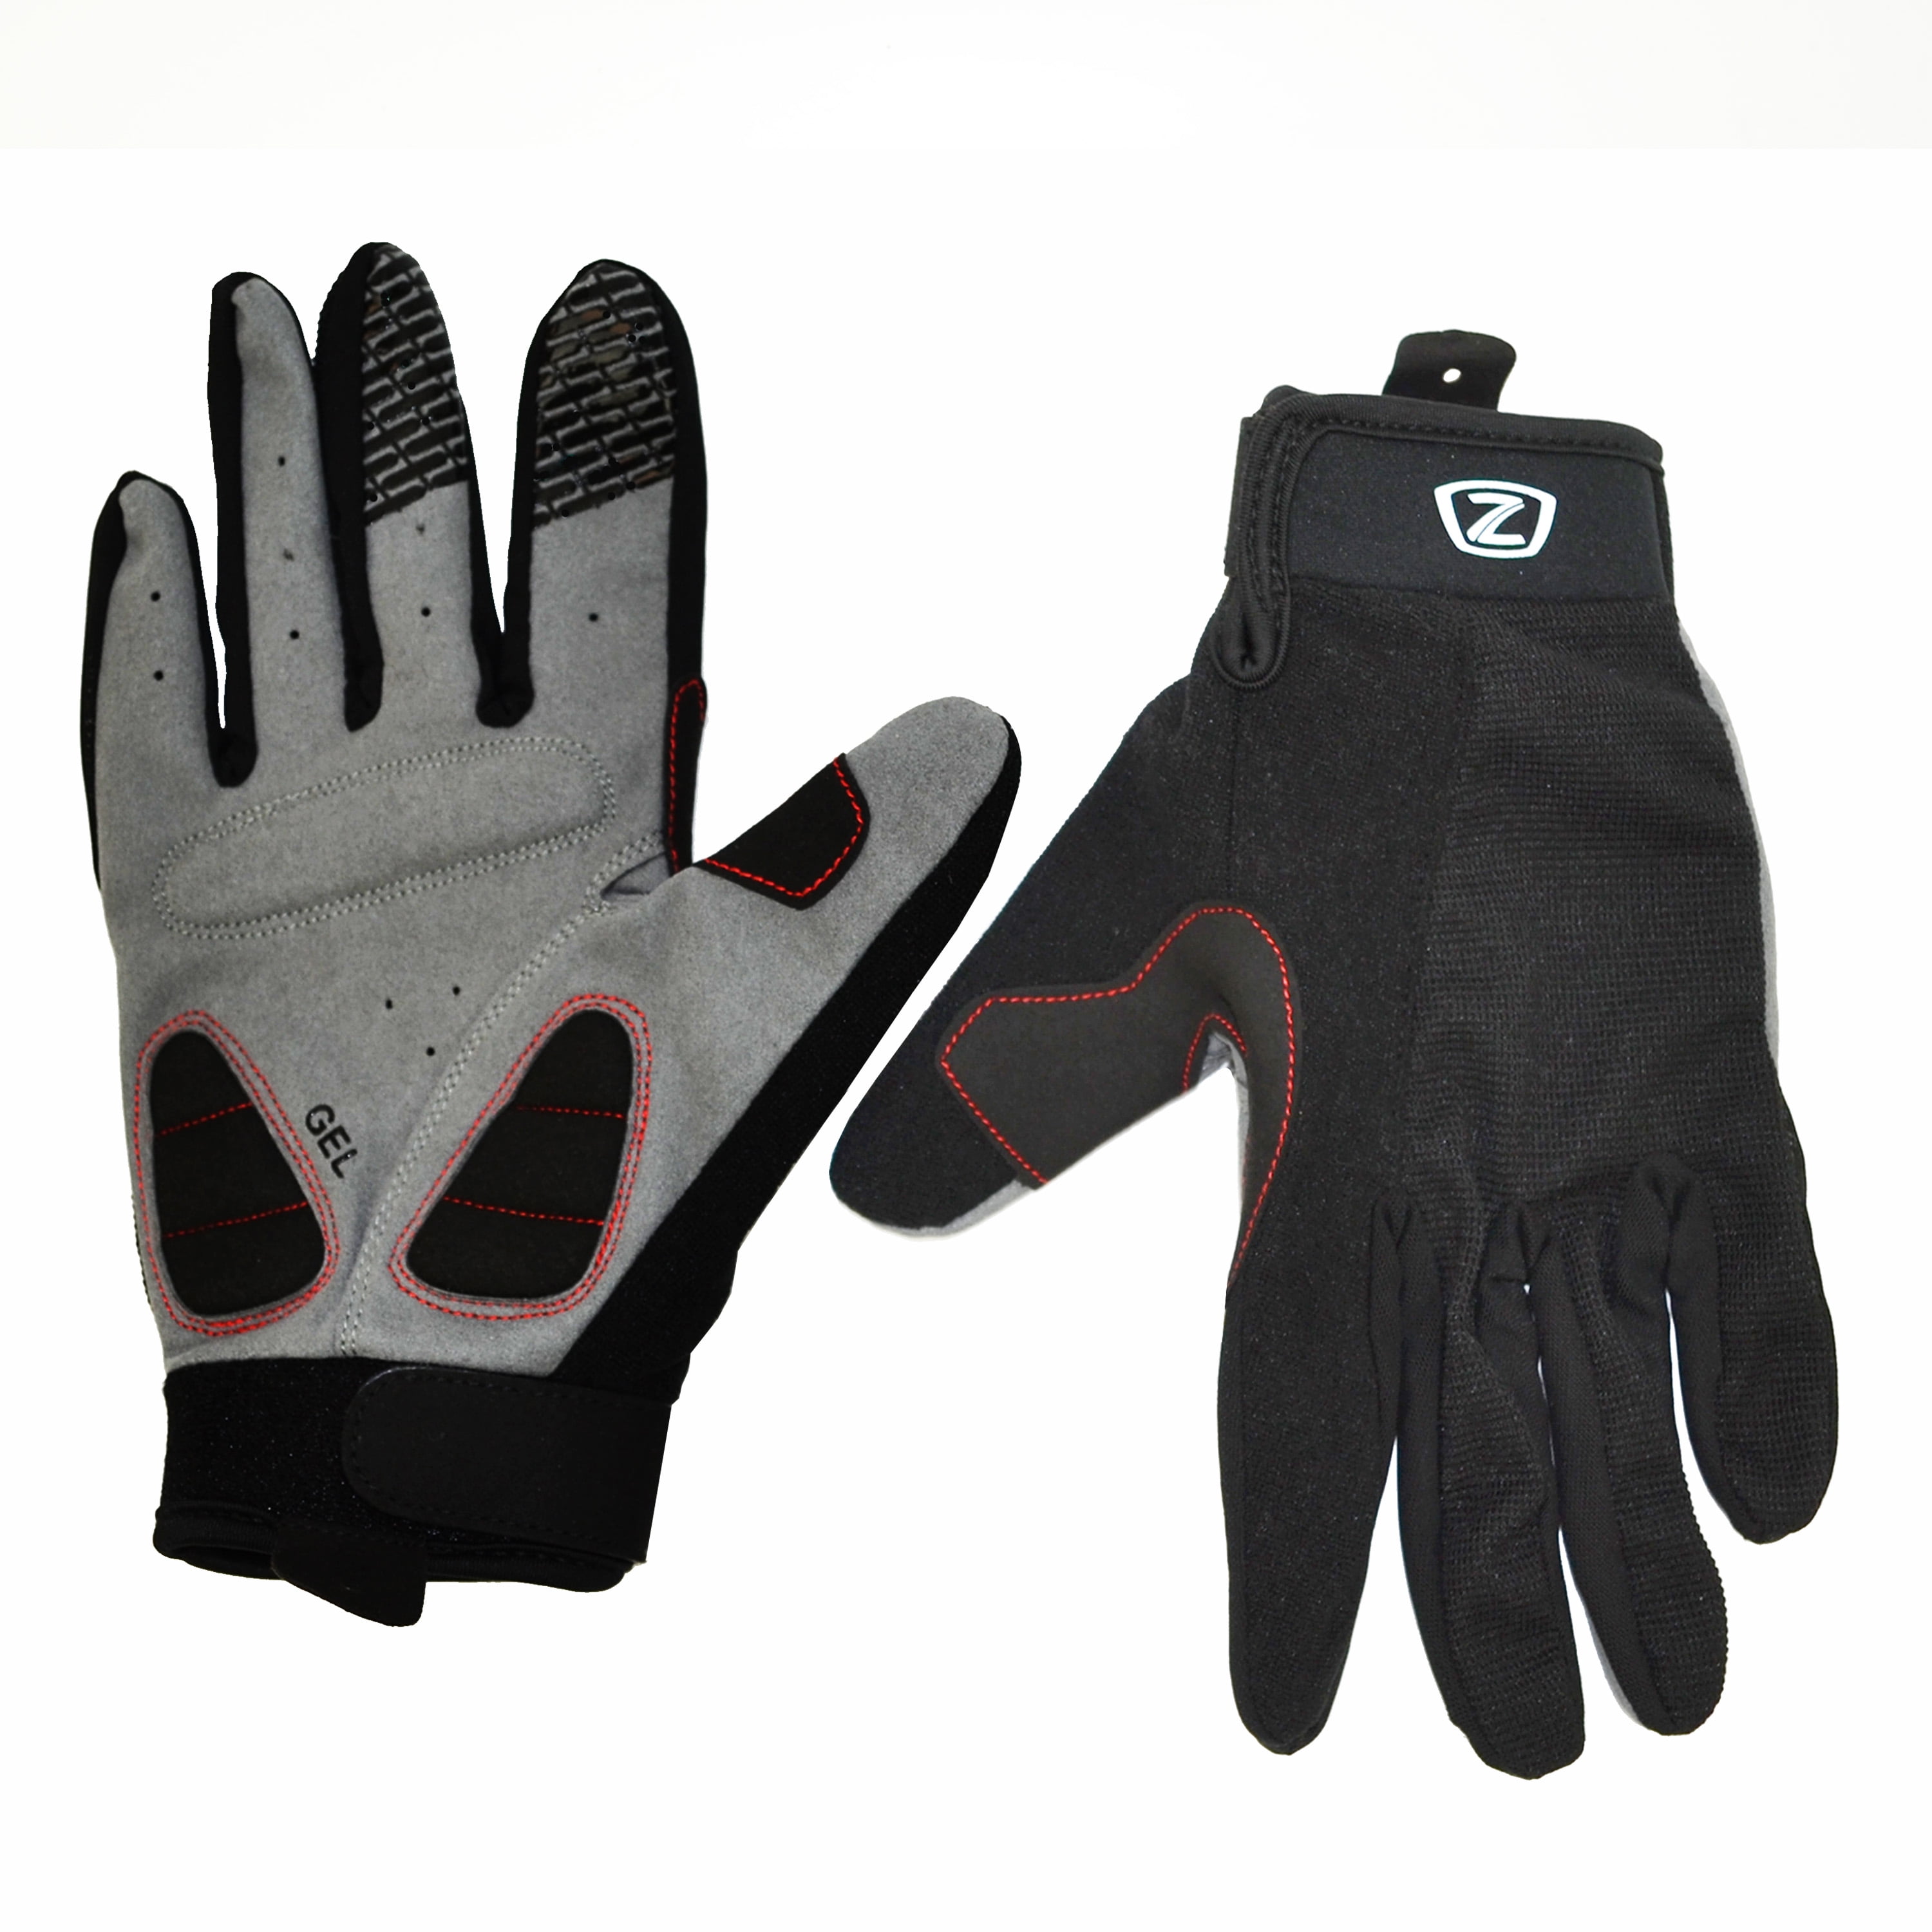 Zefal Unisex Full Finger Athletic Bike Gloves, Touch Screen Compatible